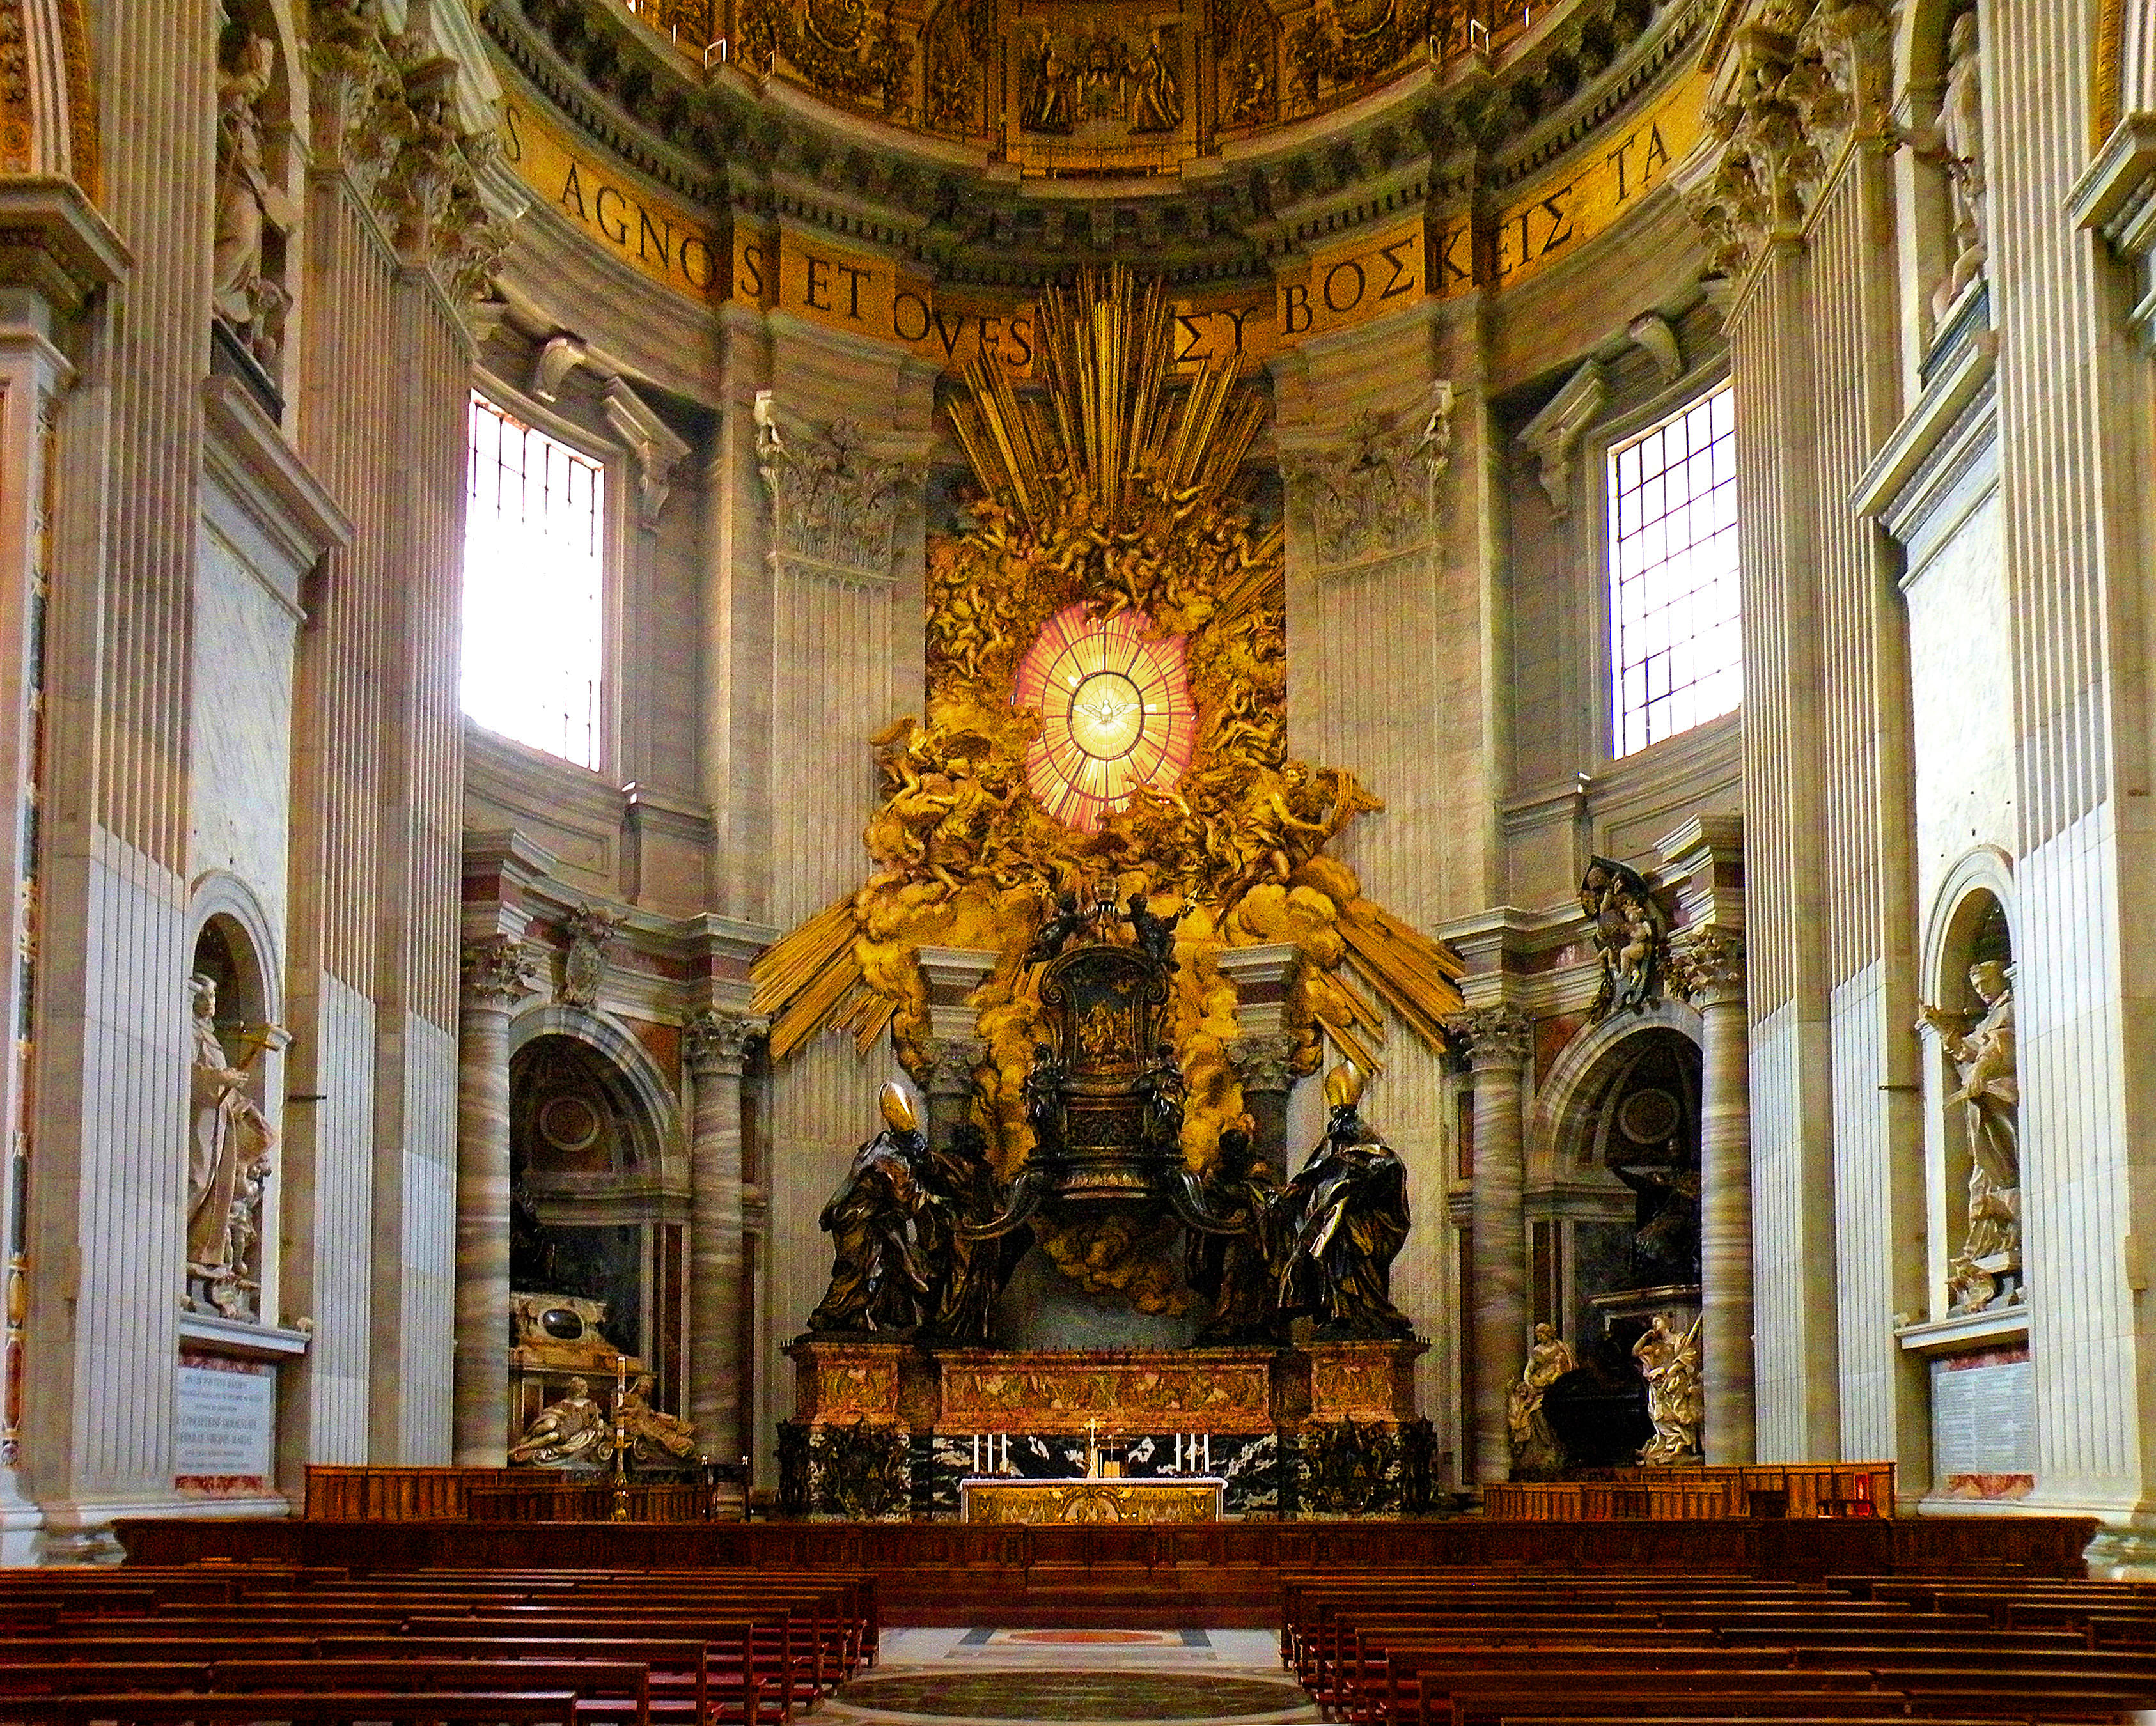 St. Peter's Basilica throne